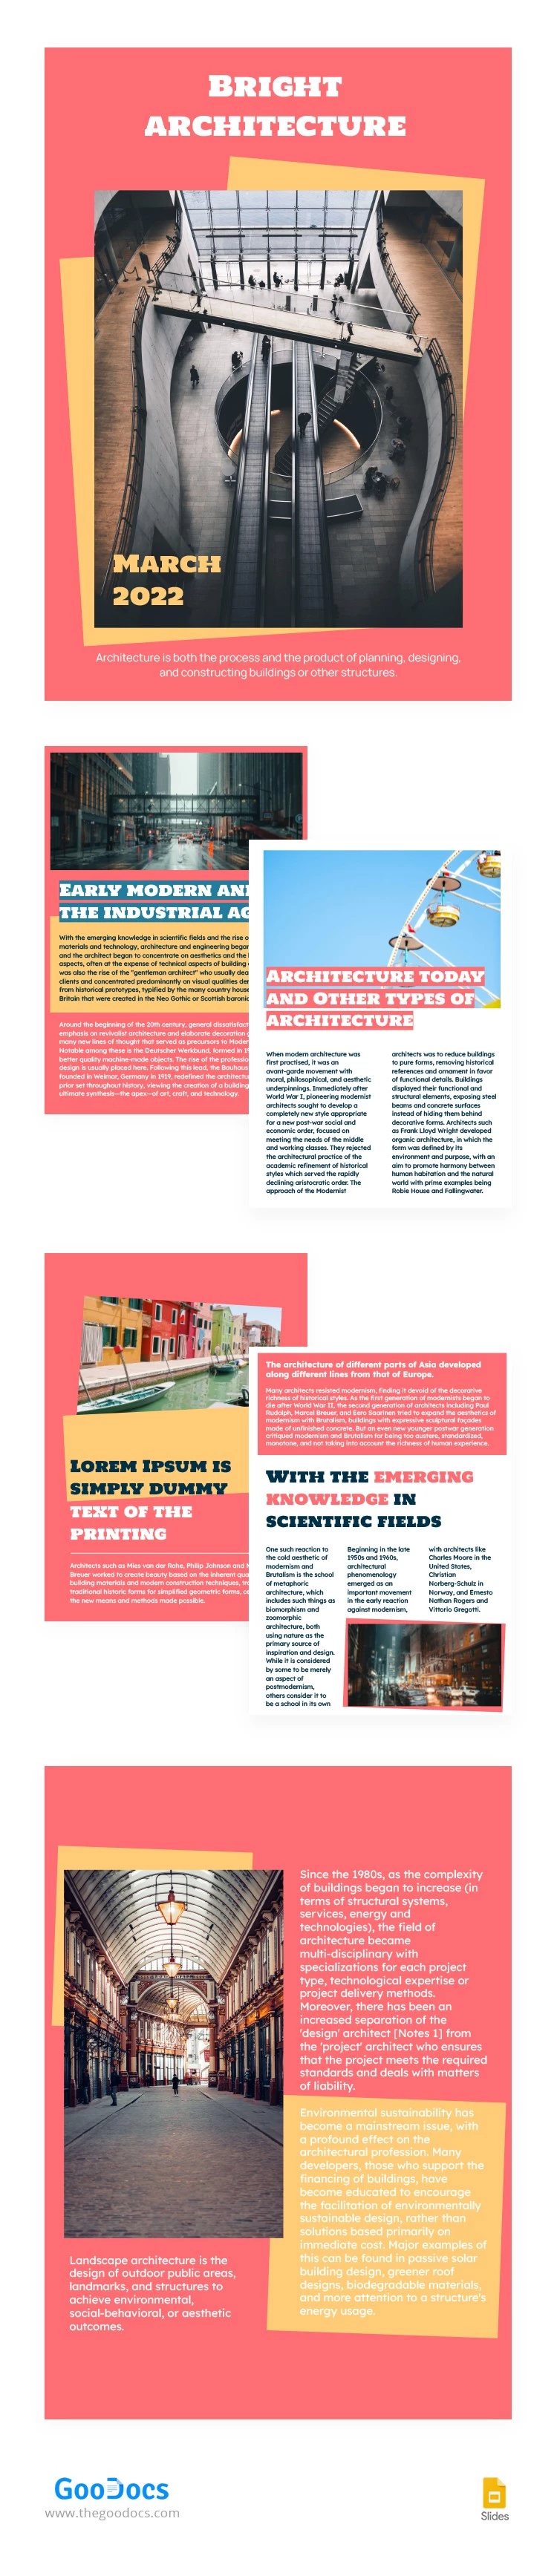 Helles Architekturmagazin - free Google Docs Template - 10063741